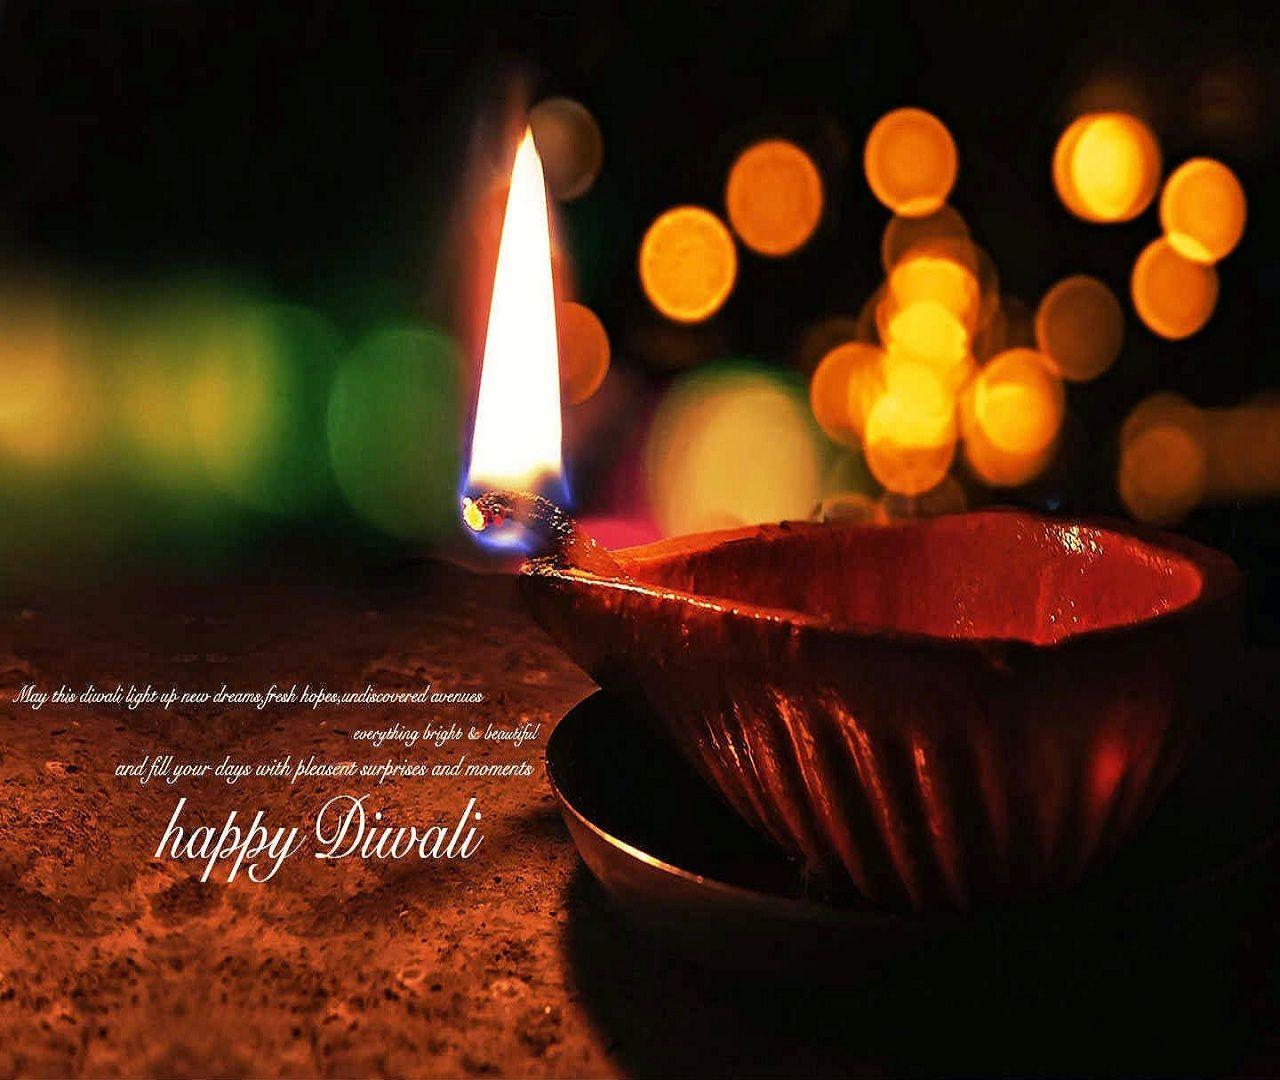 about Happy Diwali Wallpaper. Happy